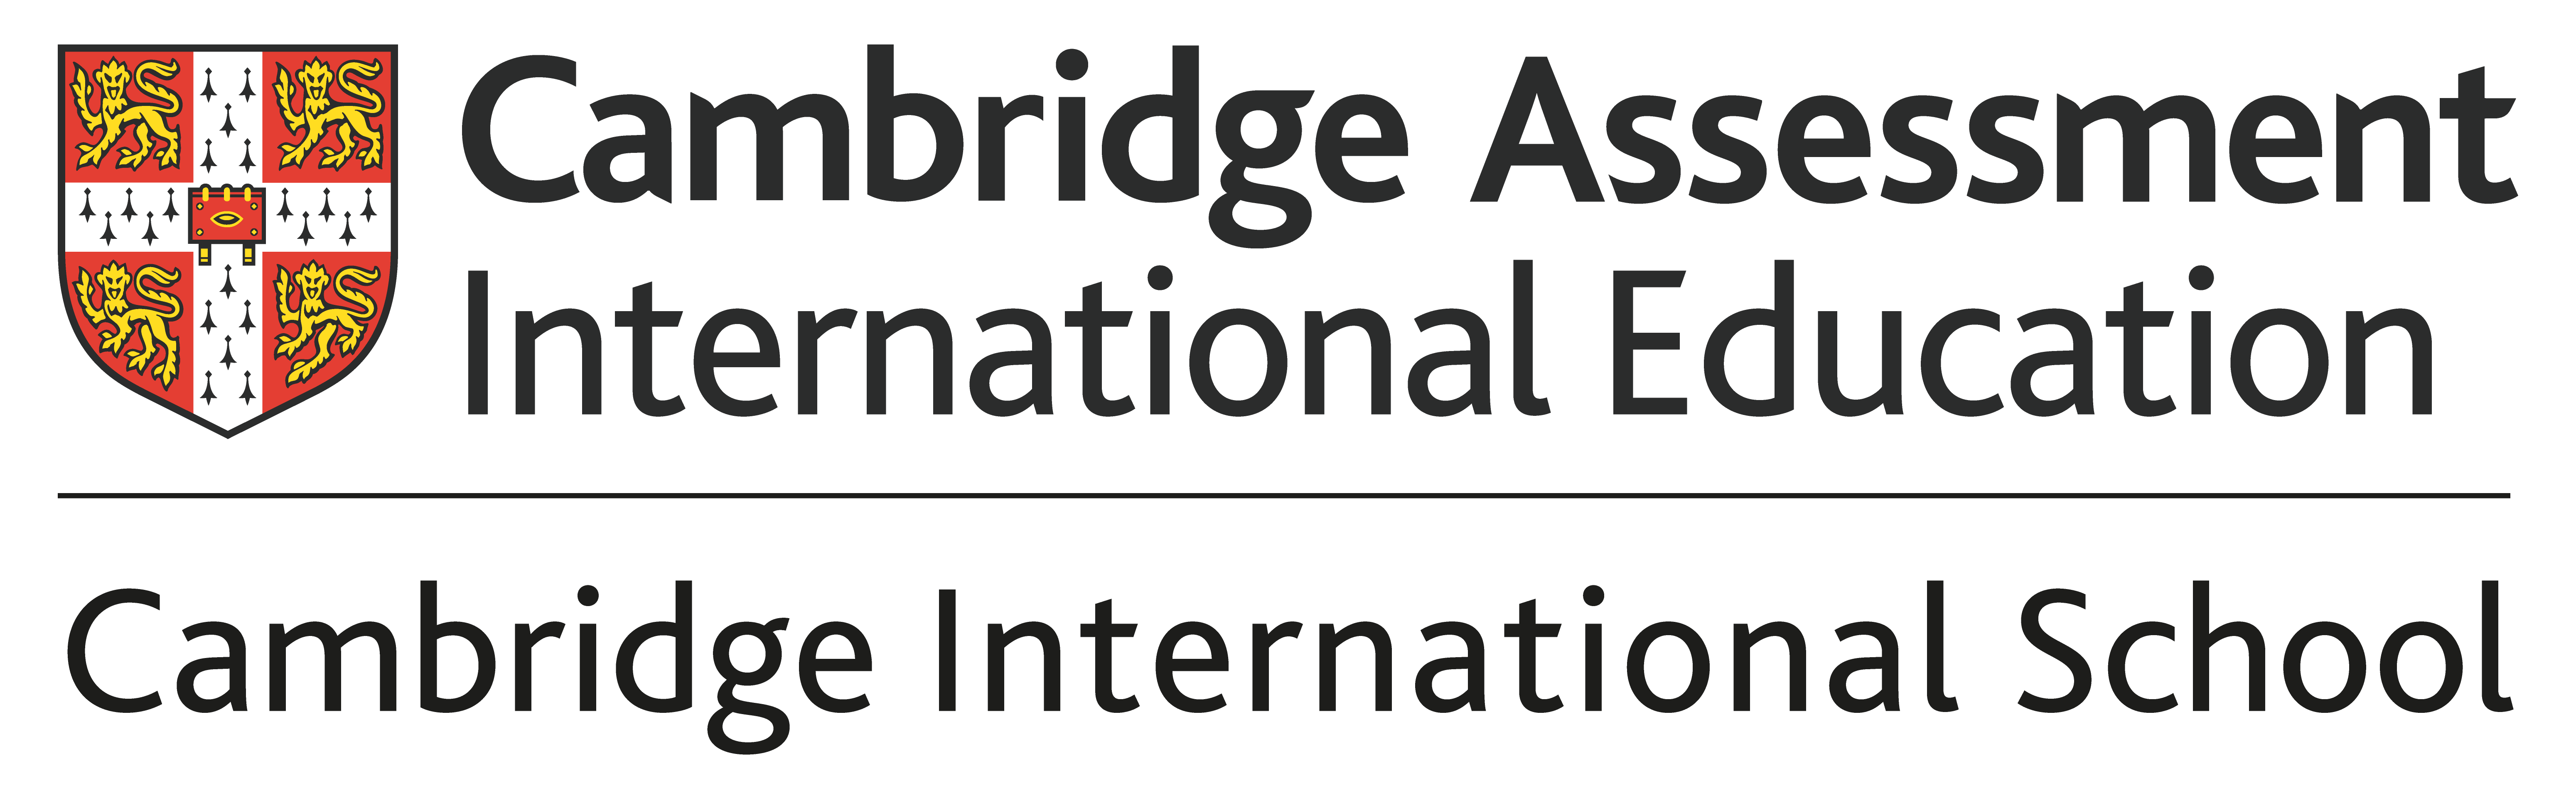 Cambridge Assessment International Education - Cambridge International School